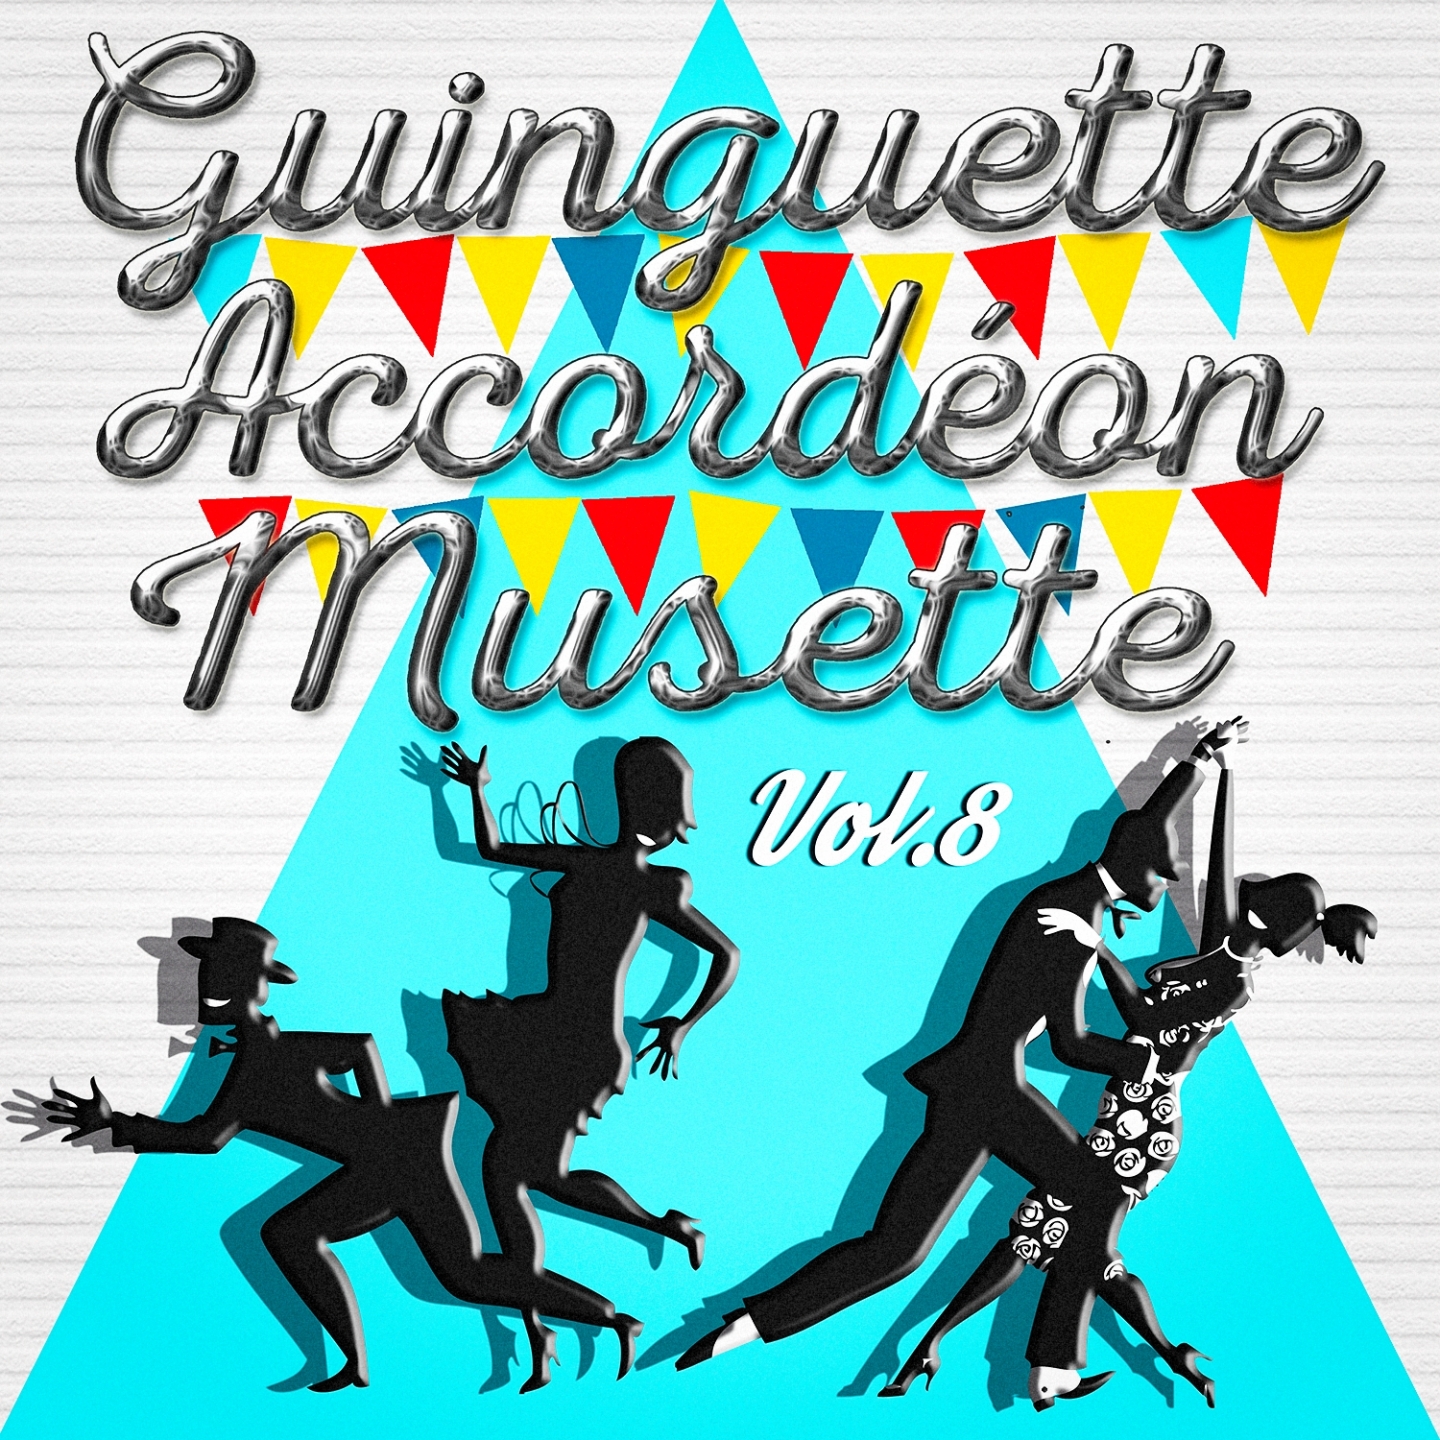 Guinguette Accorde on Musette, Vol. 8